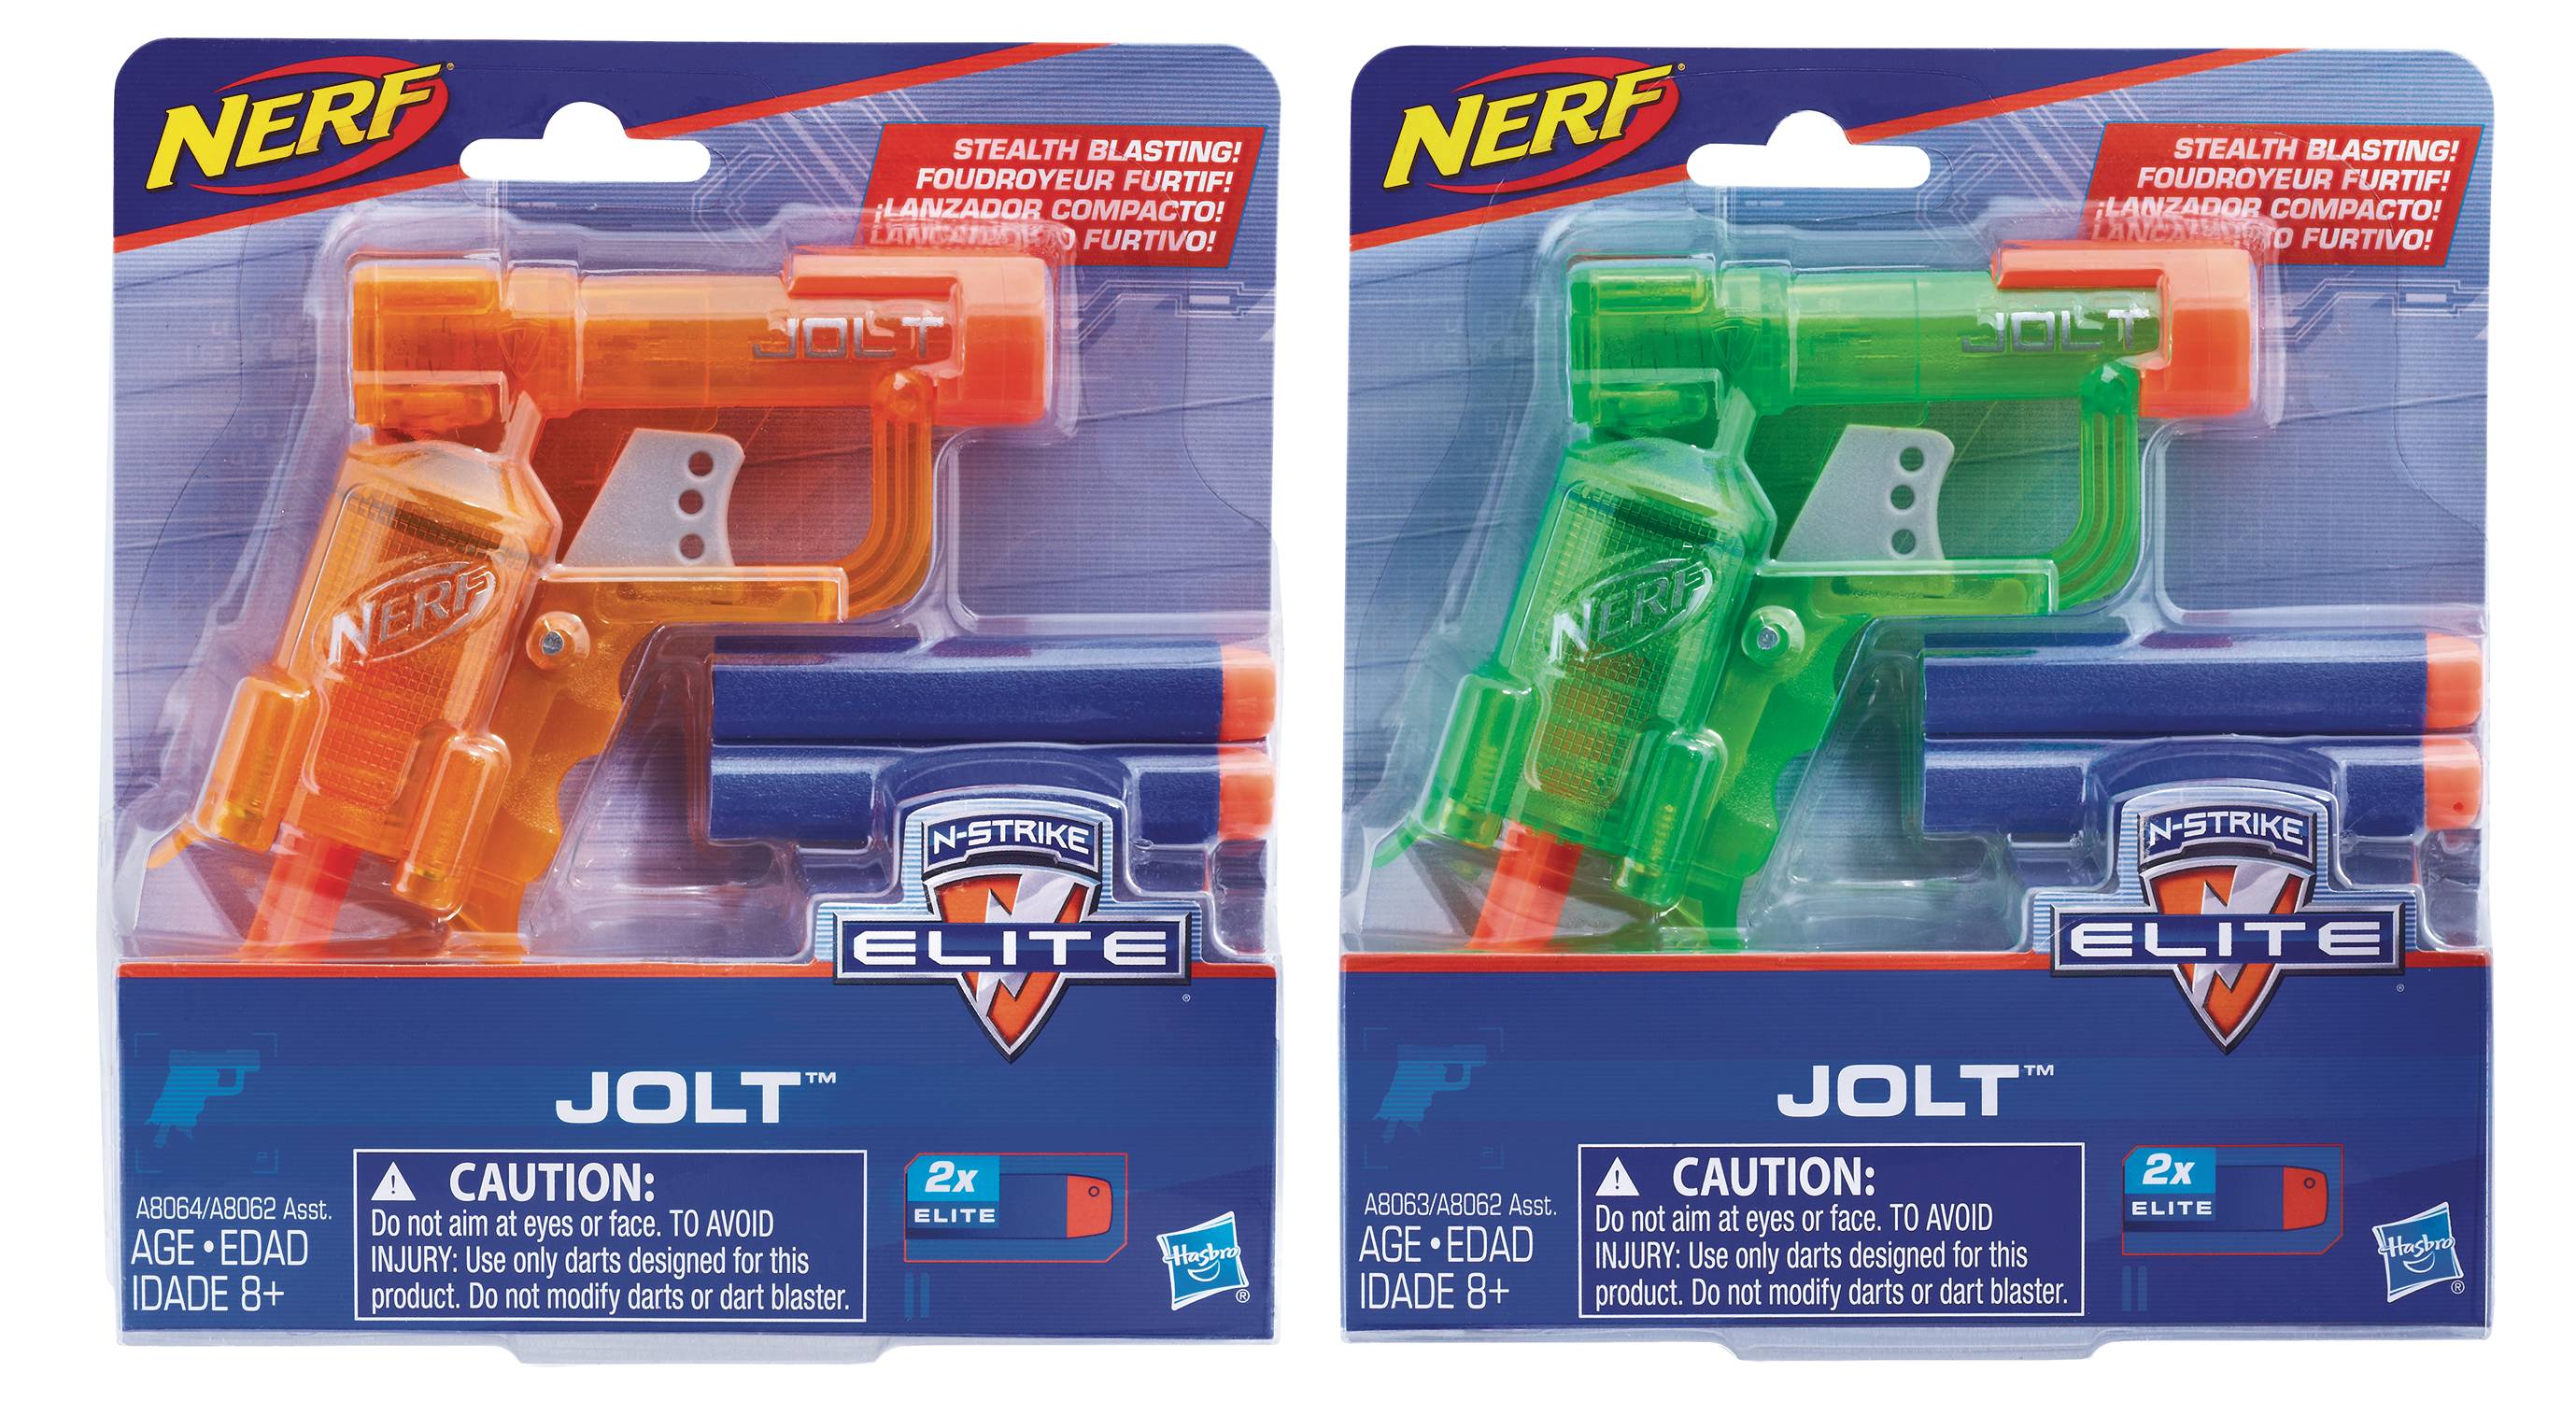 NERF Jolt Play Gun Stealth Blasting N-strike 2x Elite for sale online 